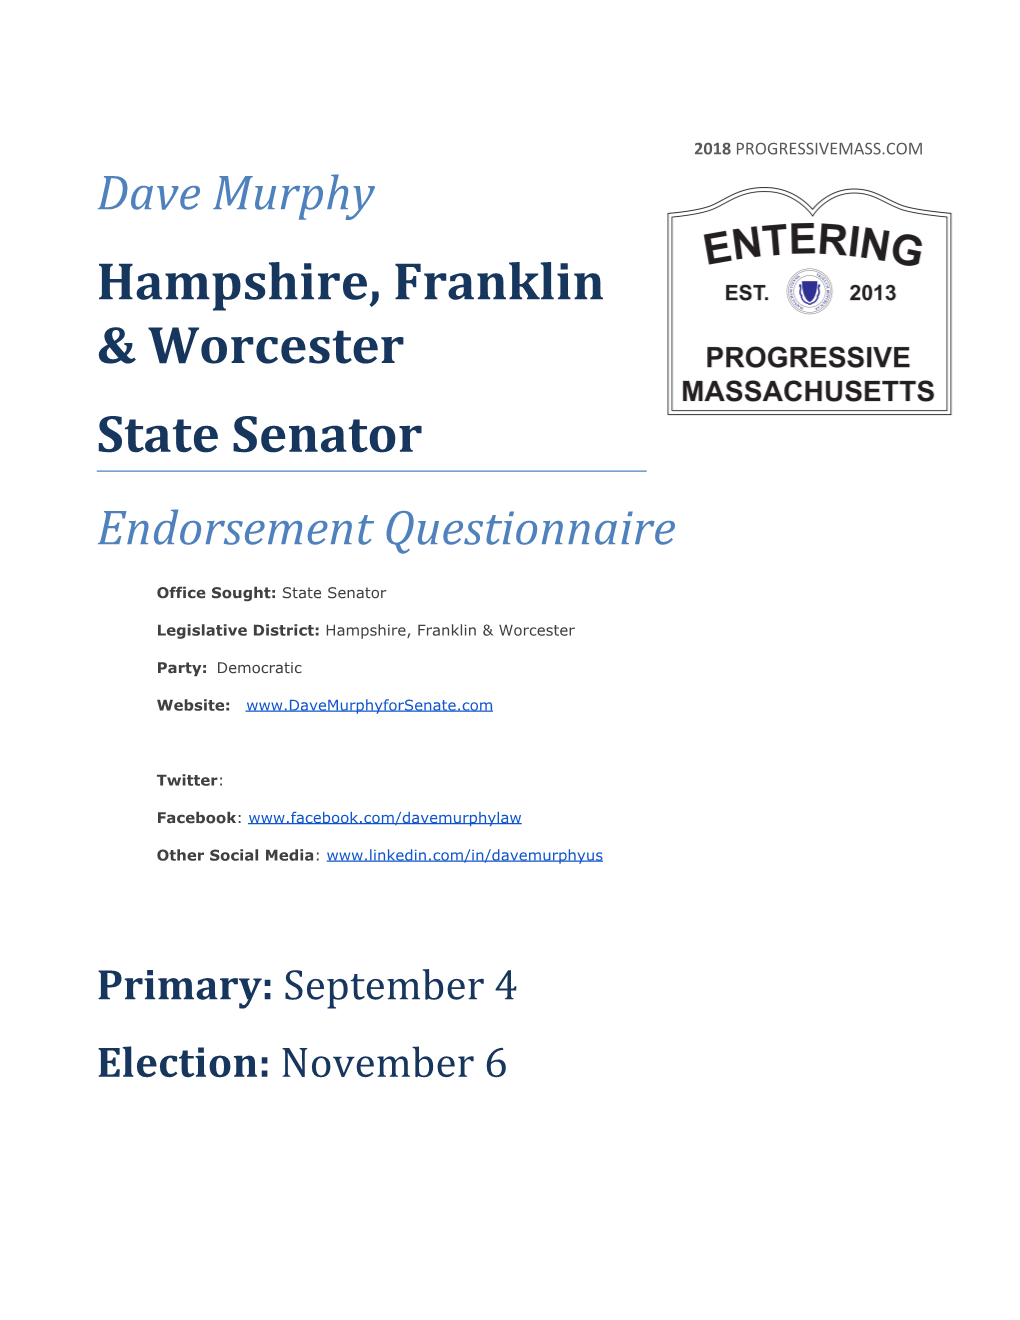 Dave Murphy Hampshire, Franklin & Worcester State Senator Endorsement Questionnaire